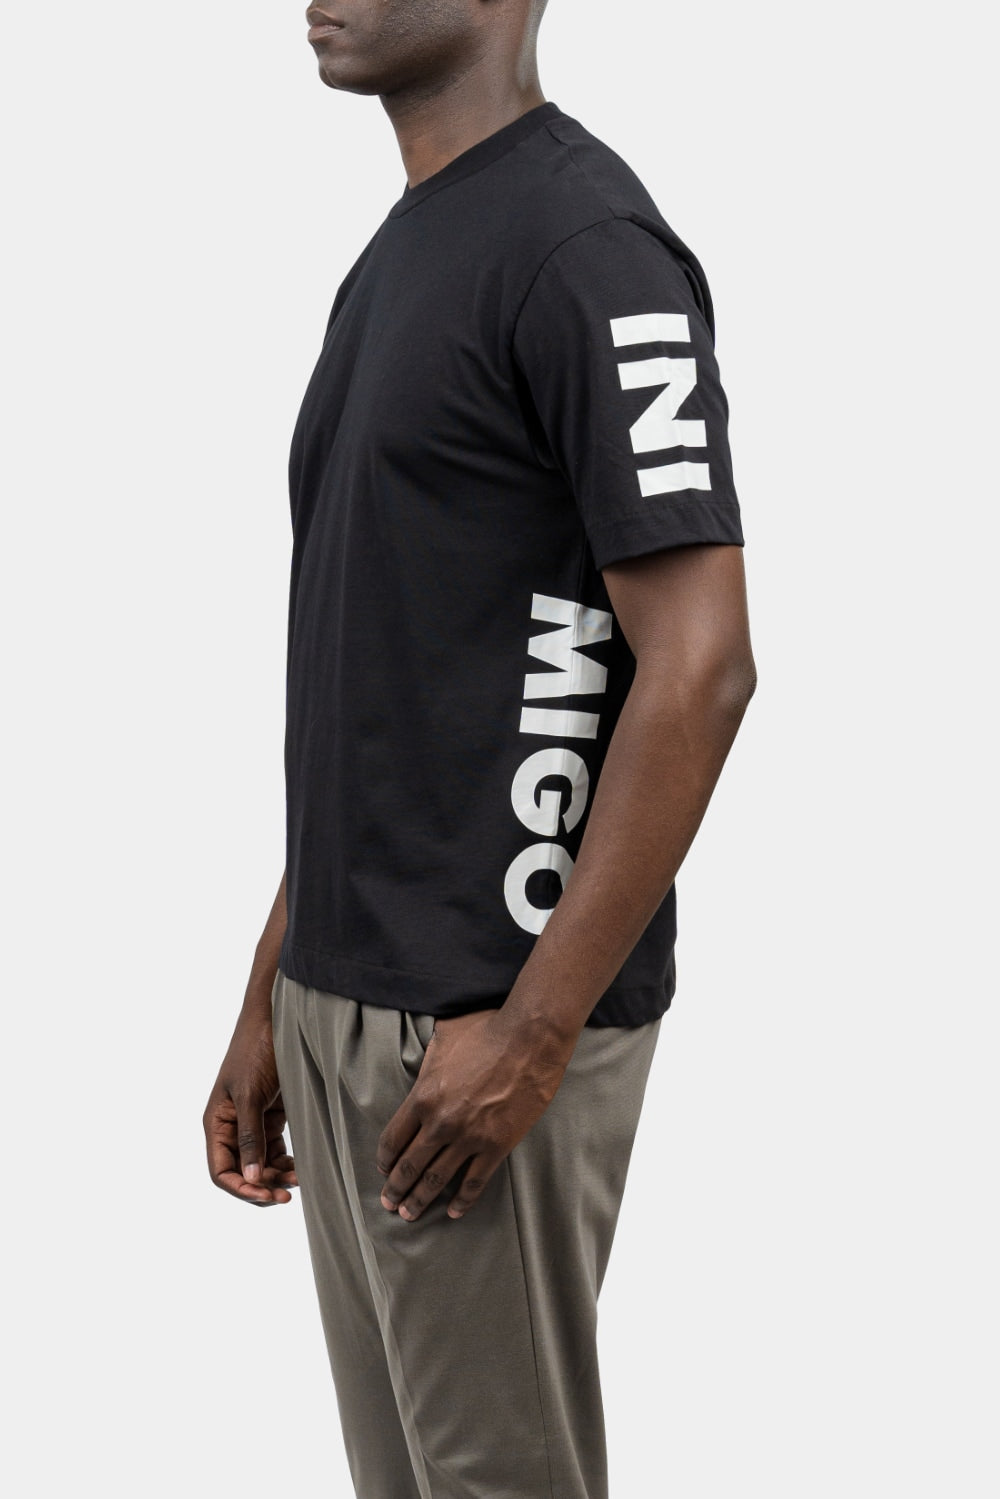 INIMIGO Lettering Side Print Comfort T-shirt